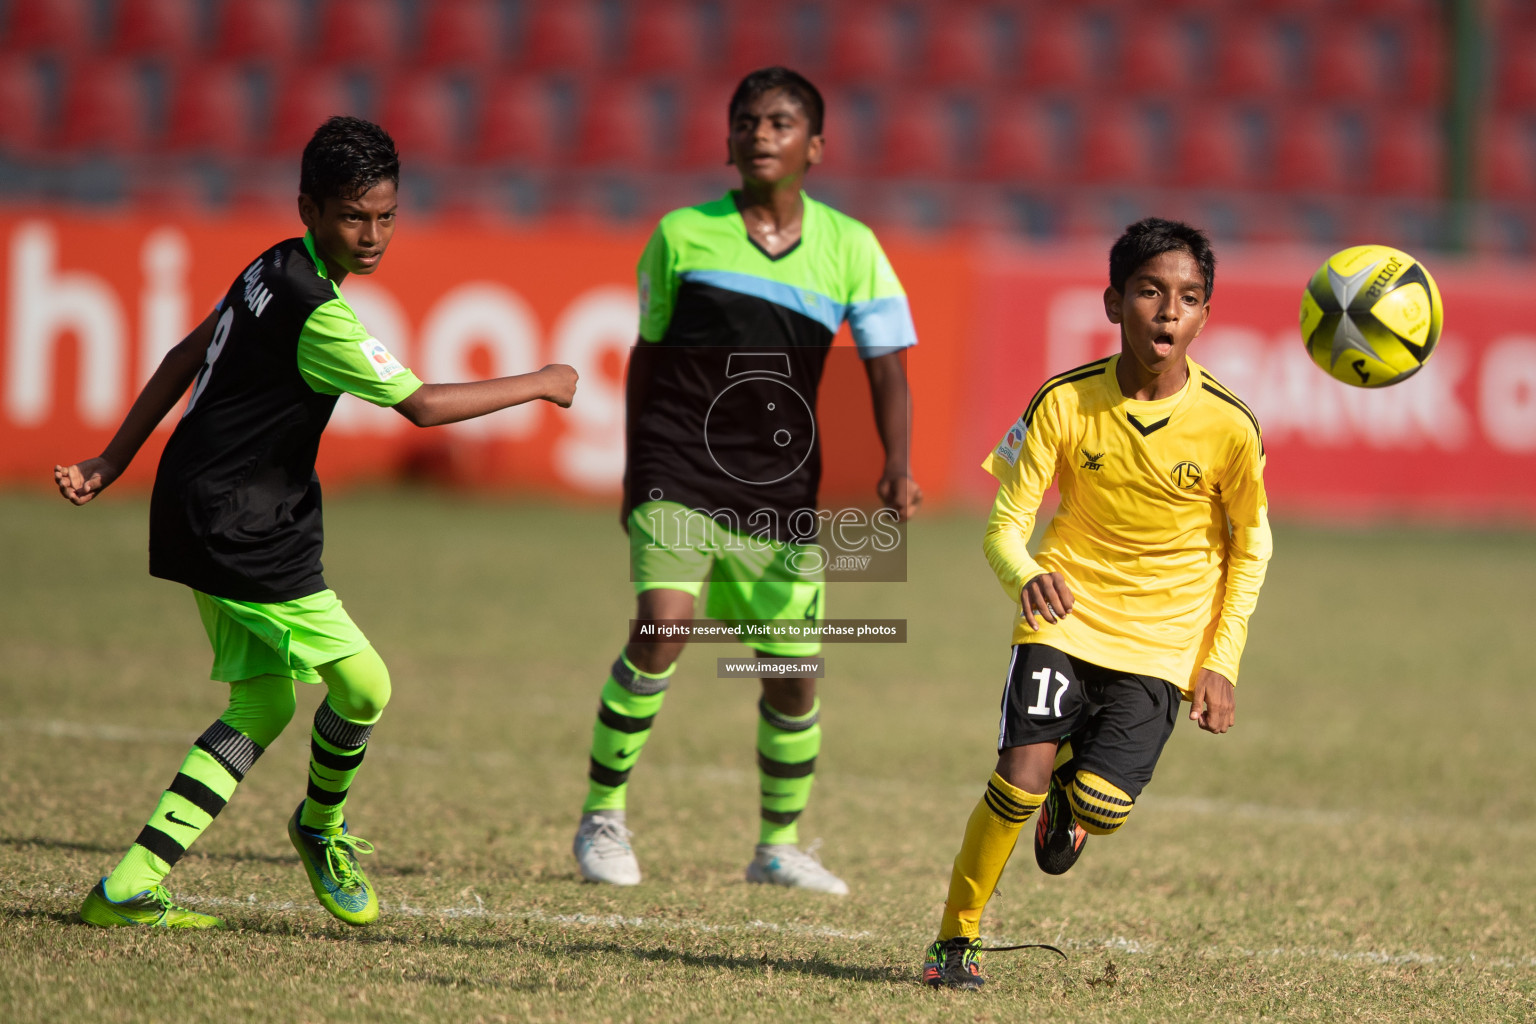 Huravee School vs Thaajuddin School in MAMEN Inter School Football Tournament 2019 (U13) in Male, Maldives on 31st March 2019, Photos: Hassan Simah / images.mv